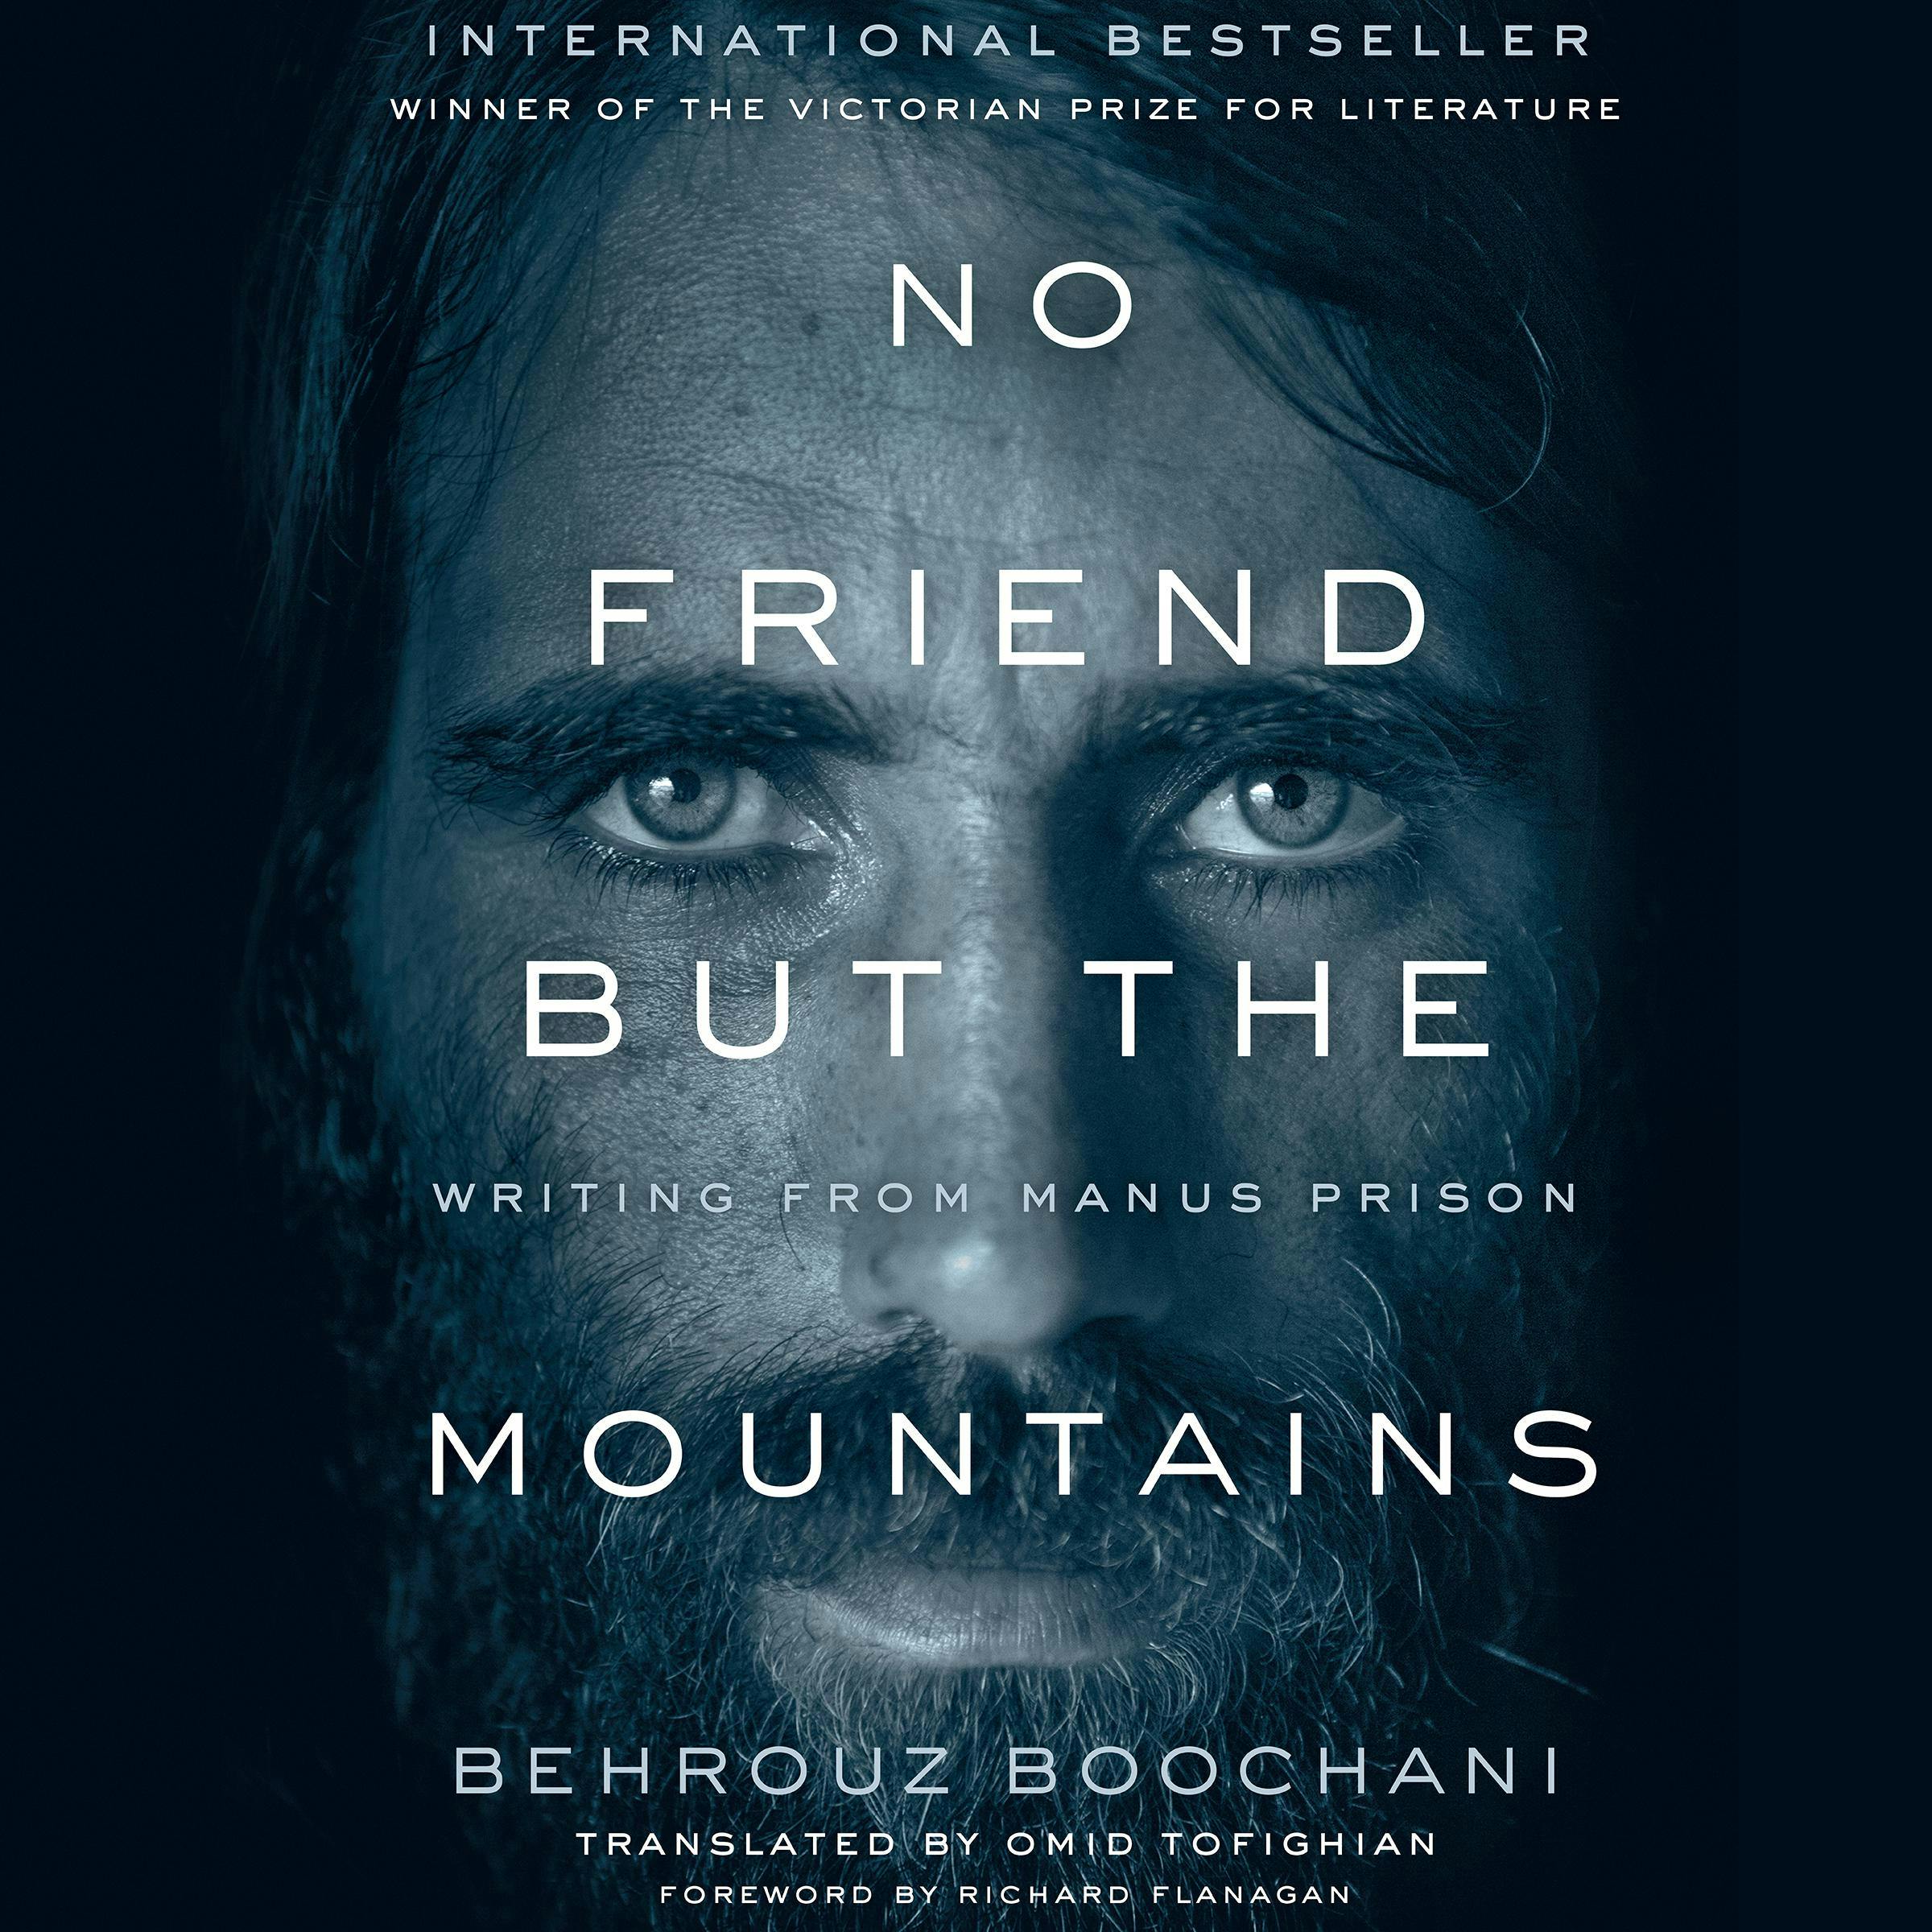 No Friend but the Mountains: Writing from Manus Prison - Behrouz Boochani